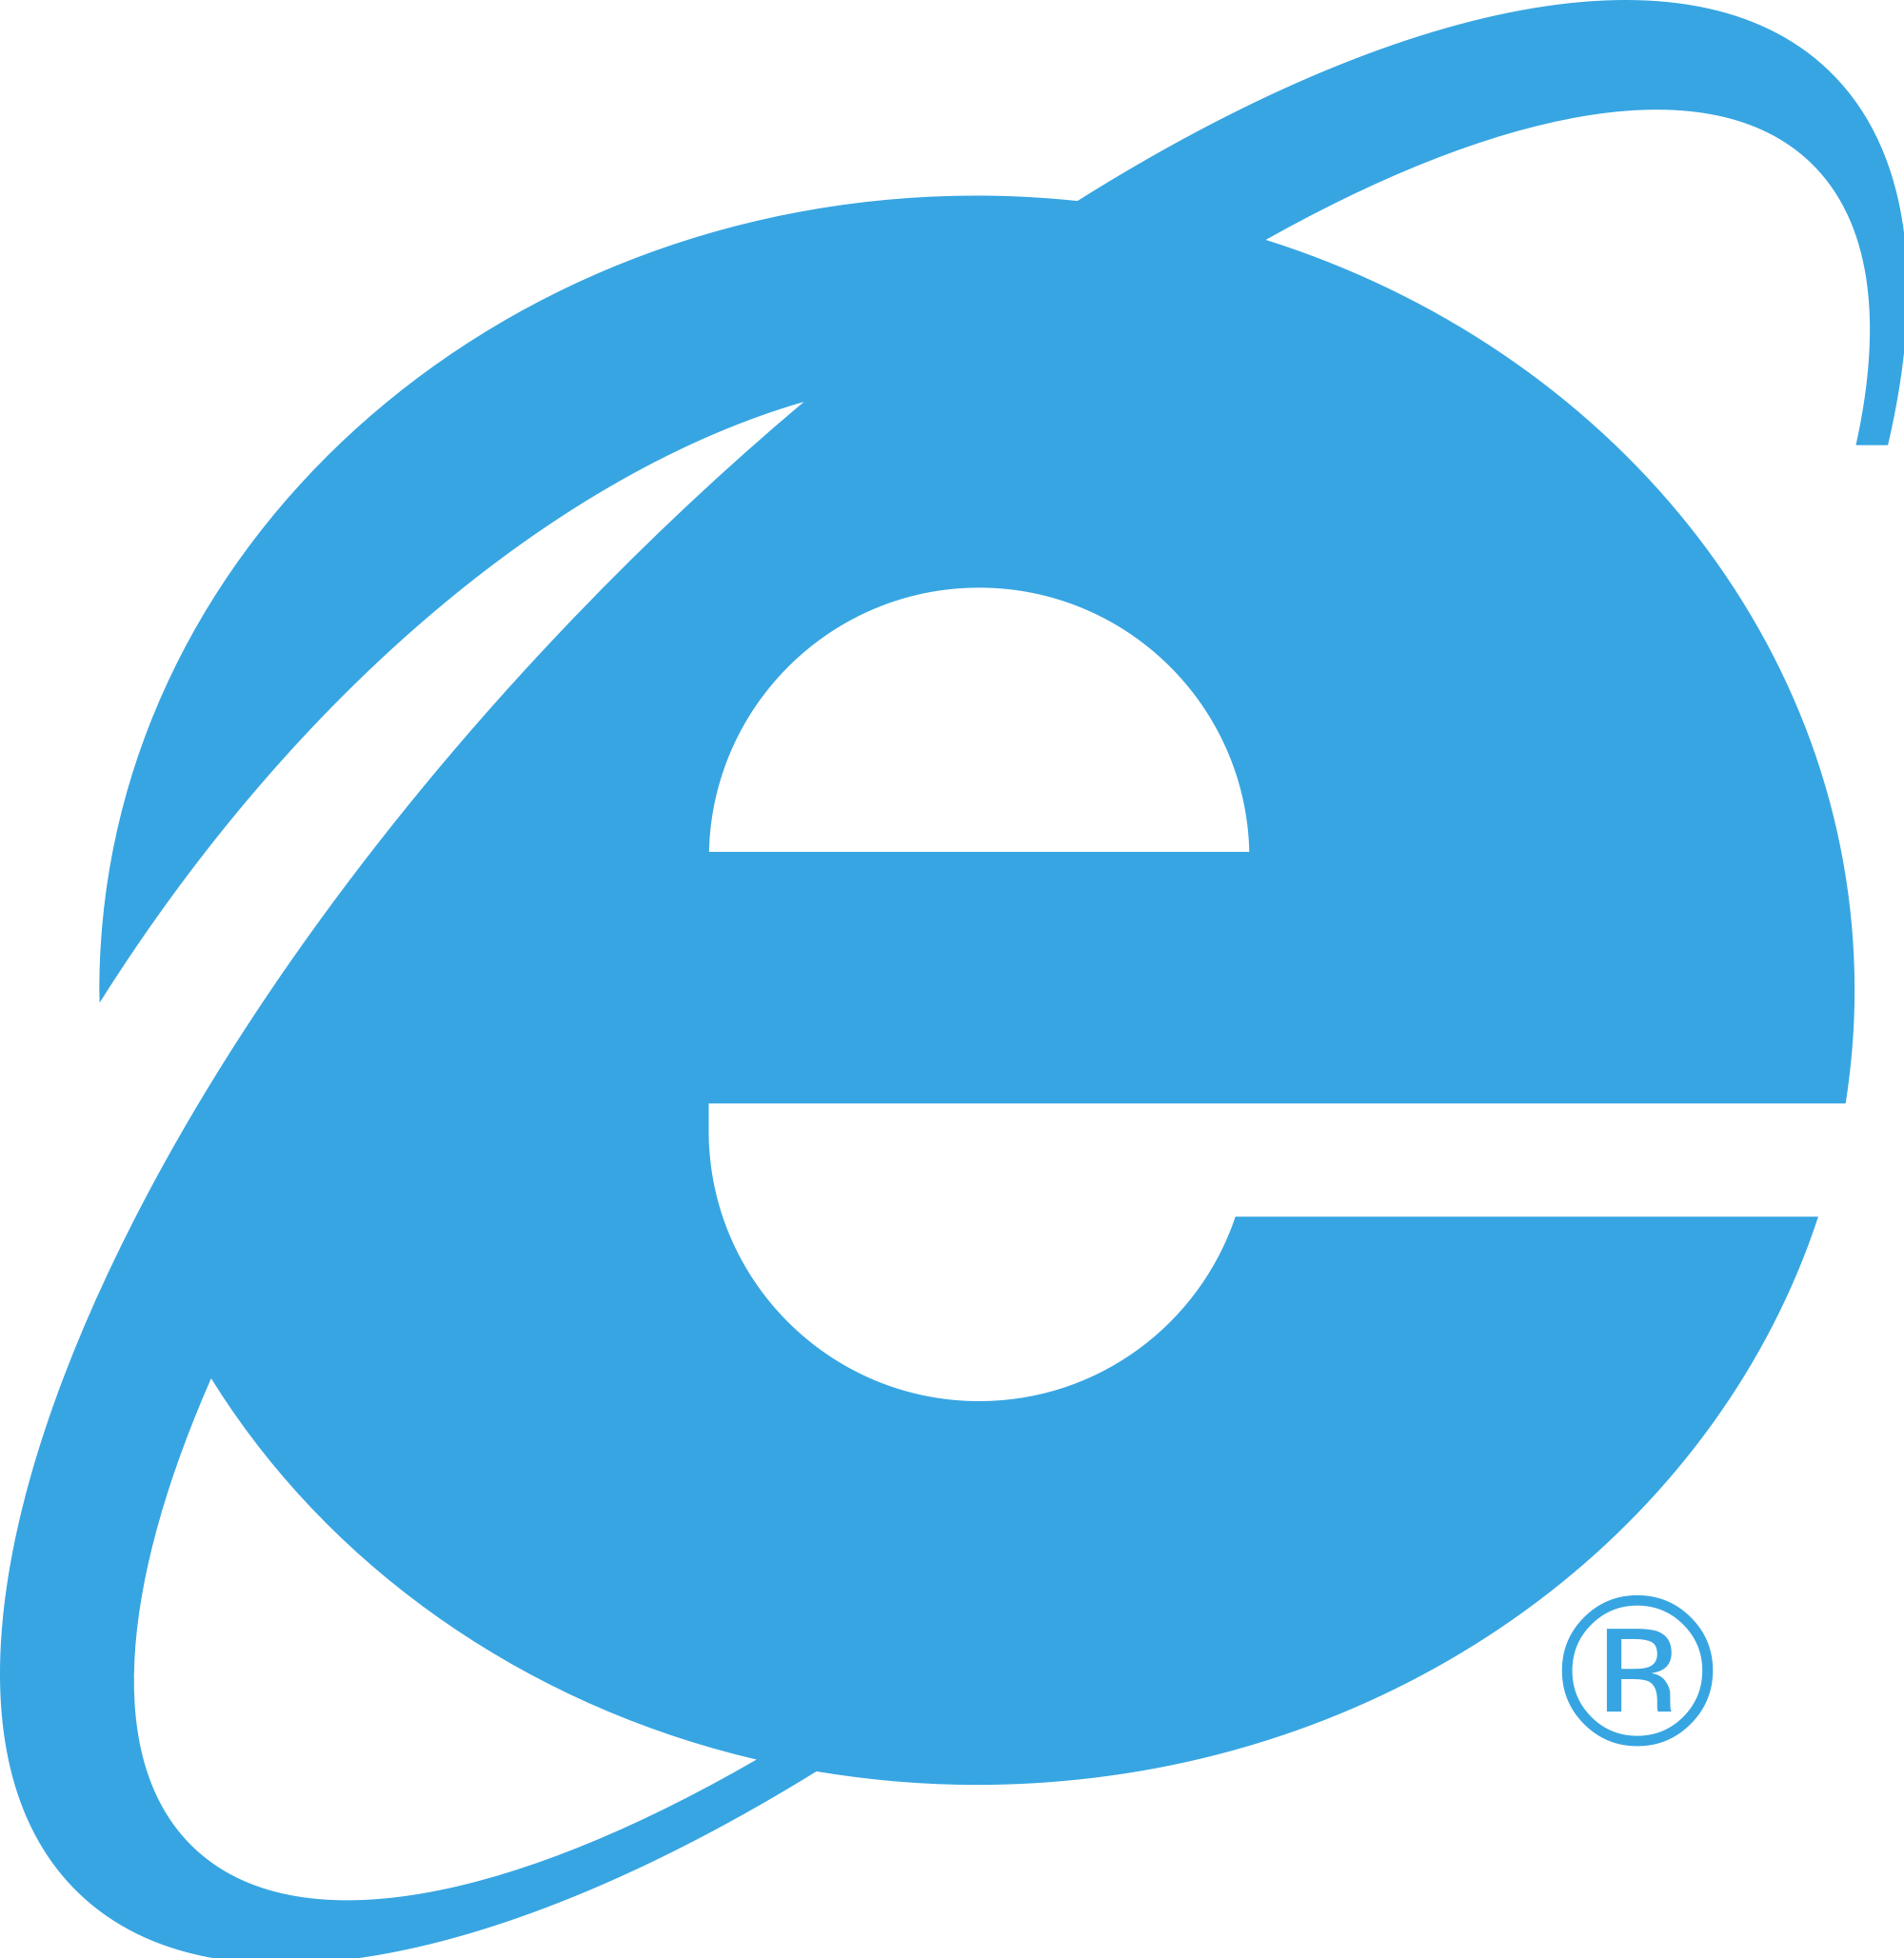 02 Oct 2014 - Internet Explorer 4.0 Logo Clipart (2000x2057), Png Download